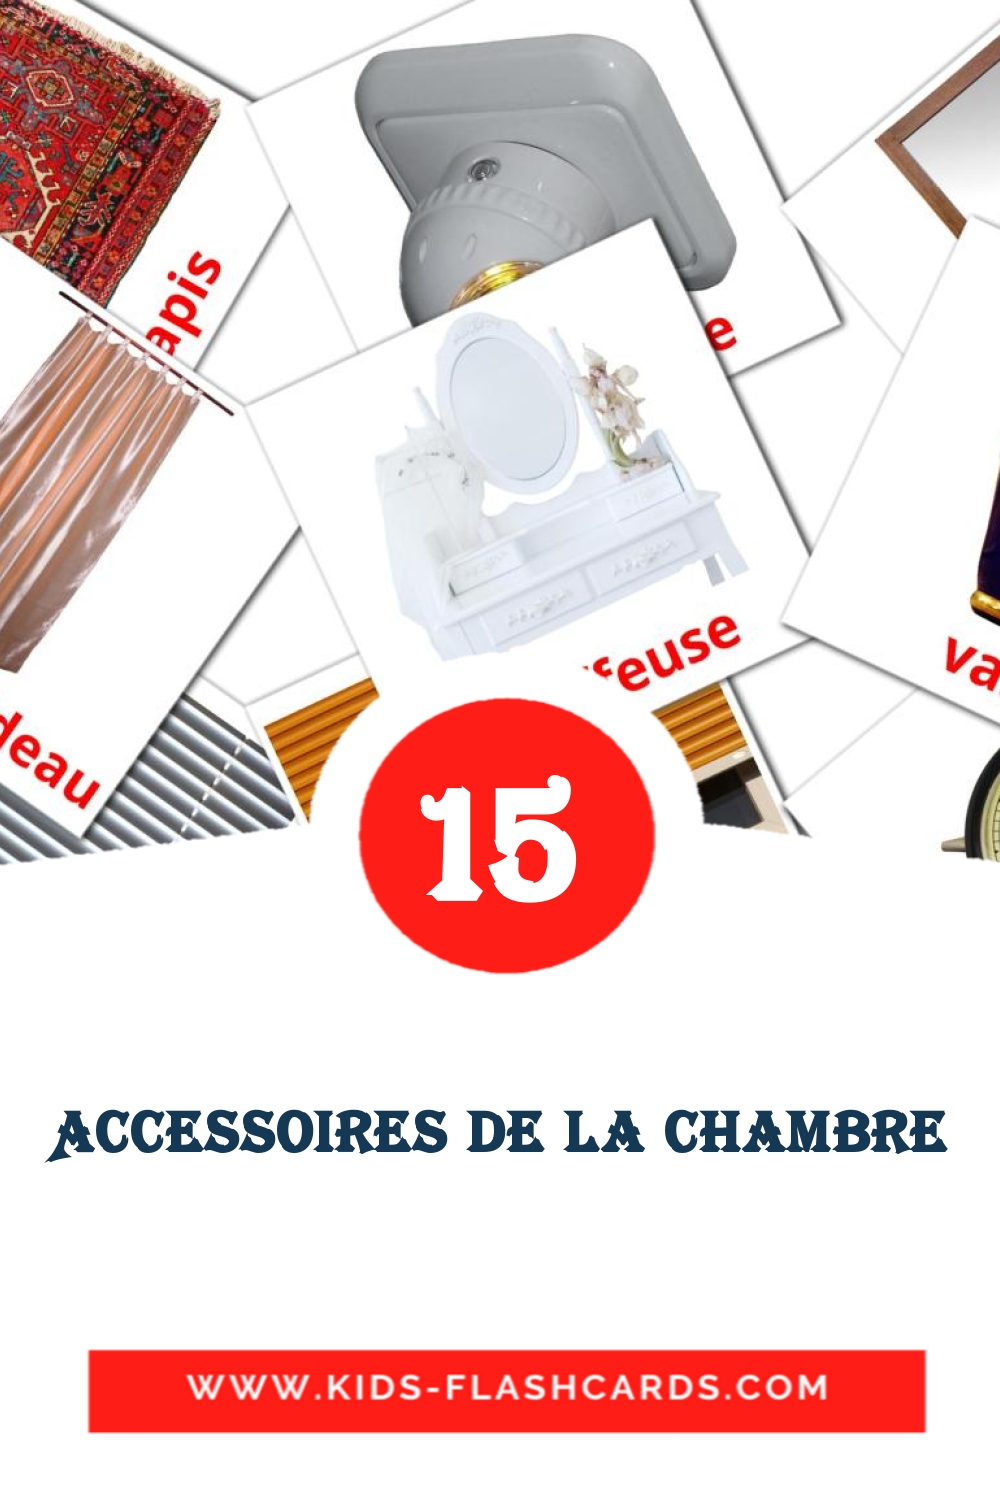 Accessoires de la Chambre на французском для Детского Сада (18 карточек)